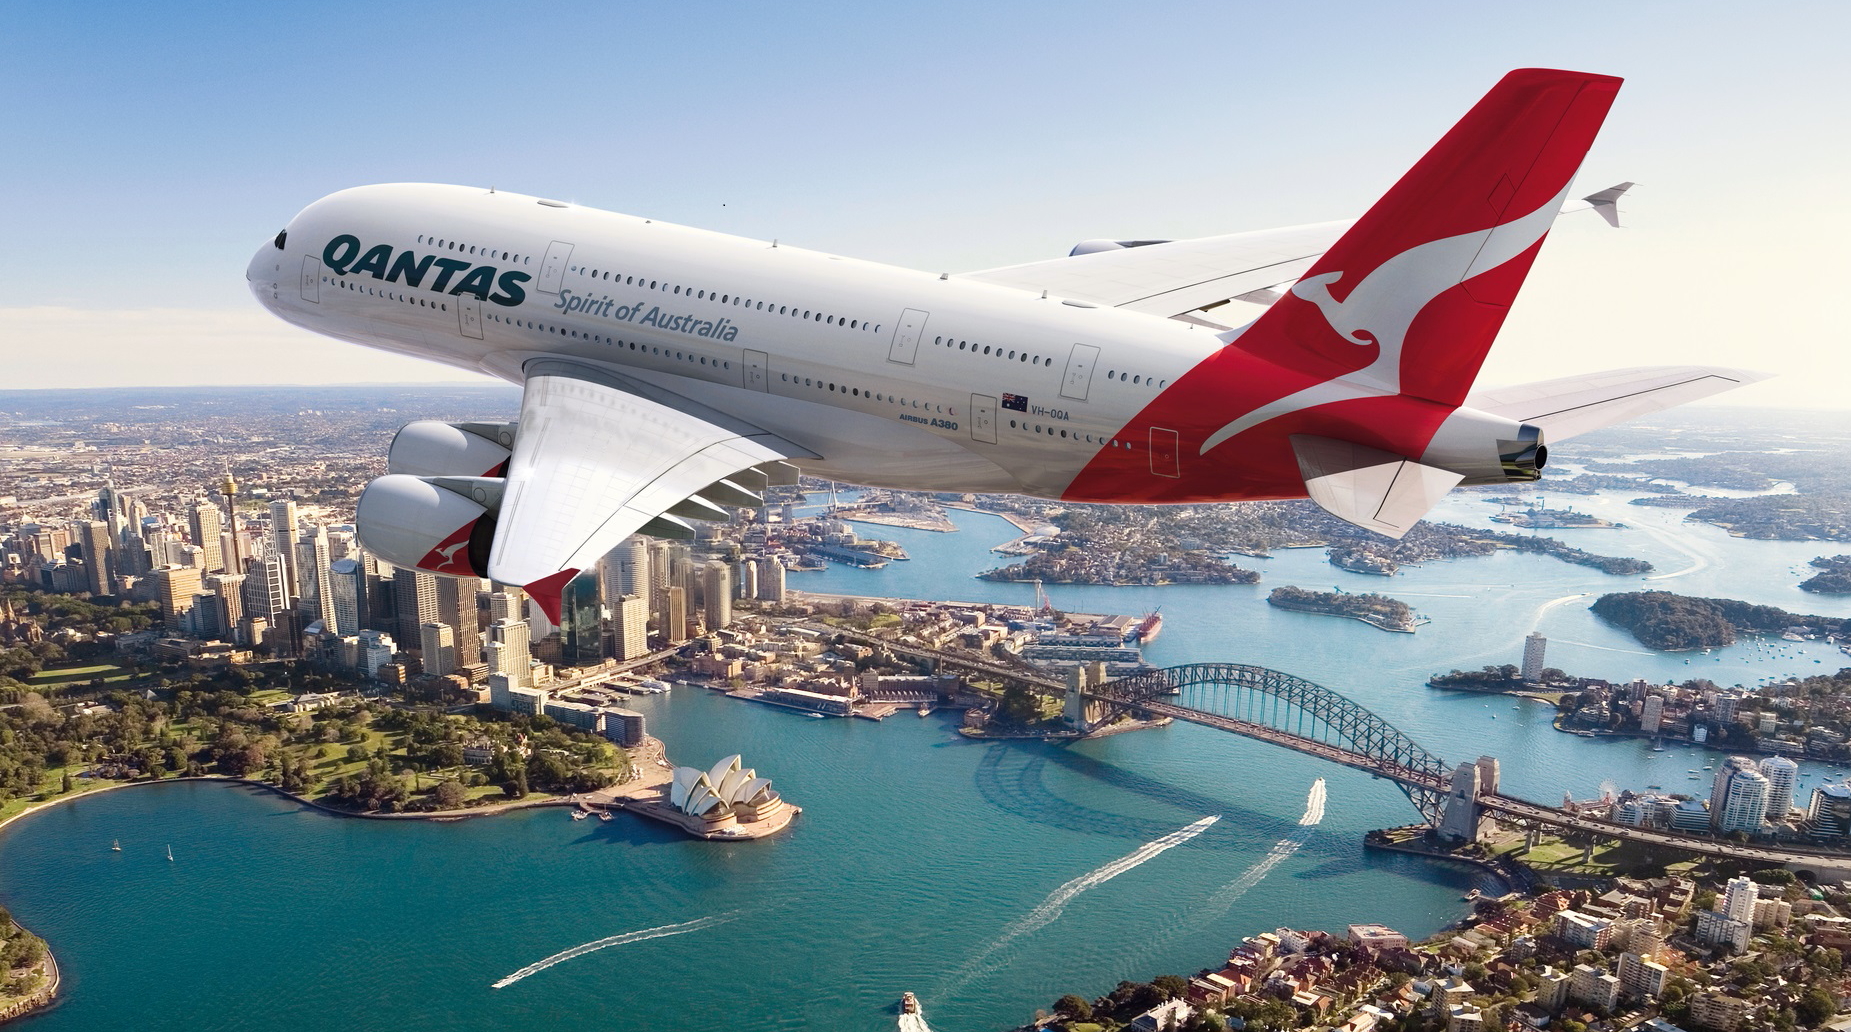 Qantas Airbus A380 flying over Sydney, Australia